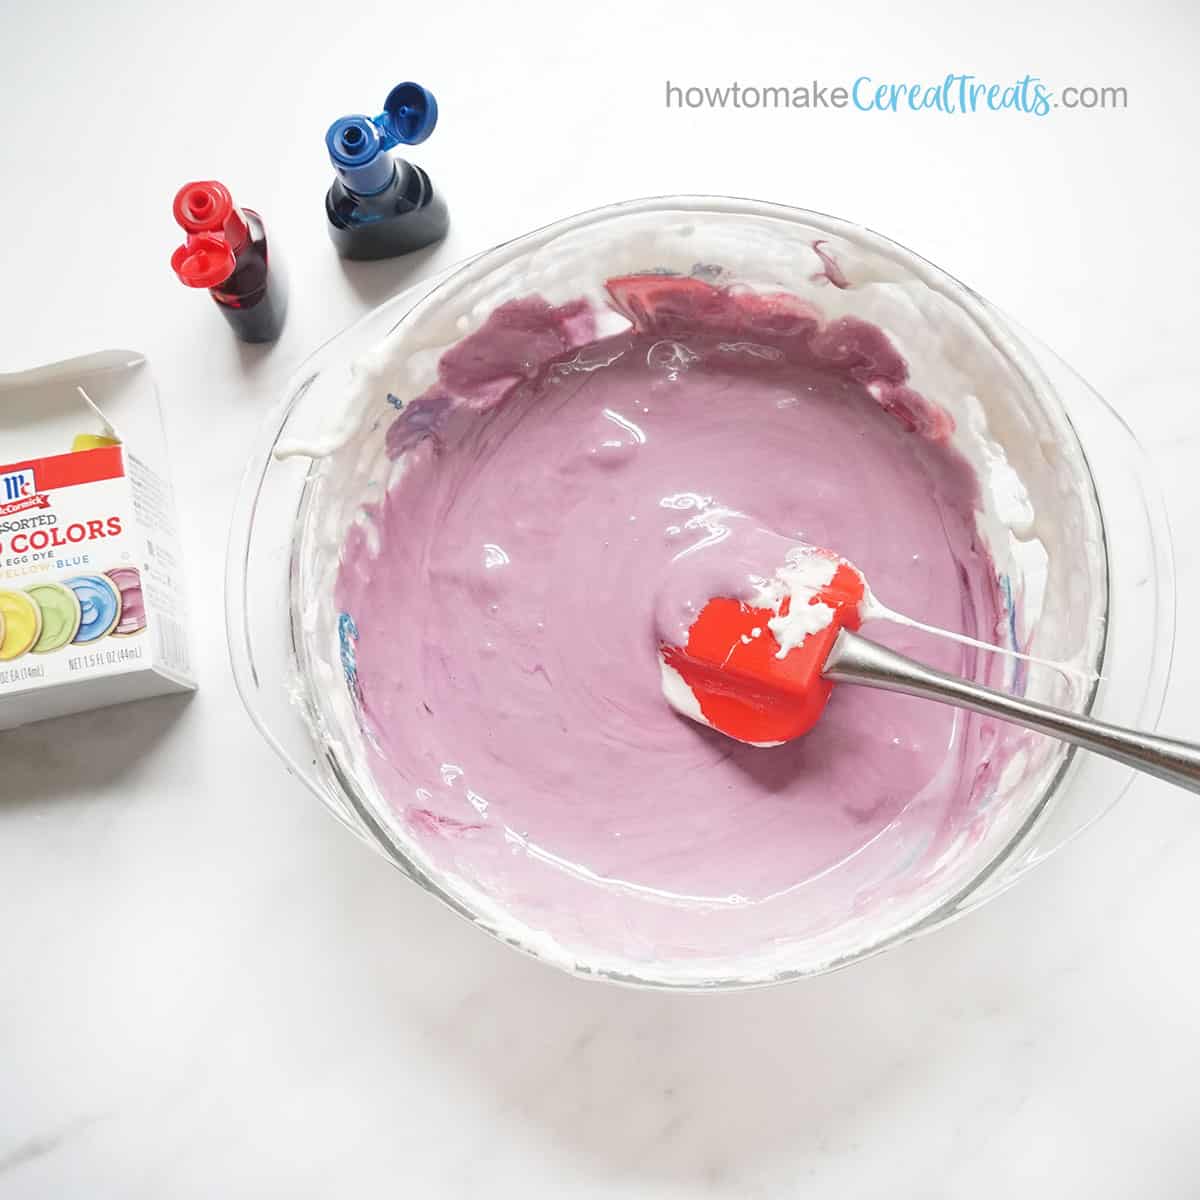 coloring Rice Krispie Treats purple with liquid food coloring